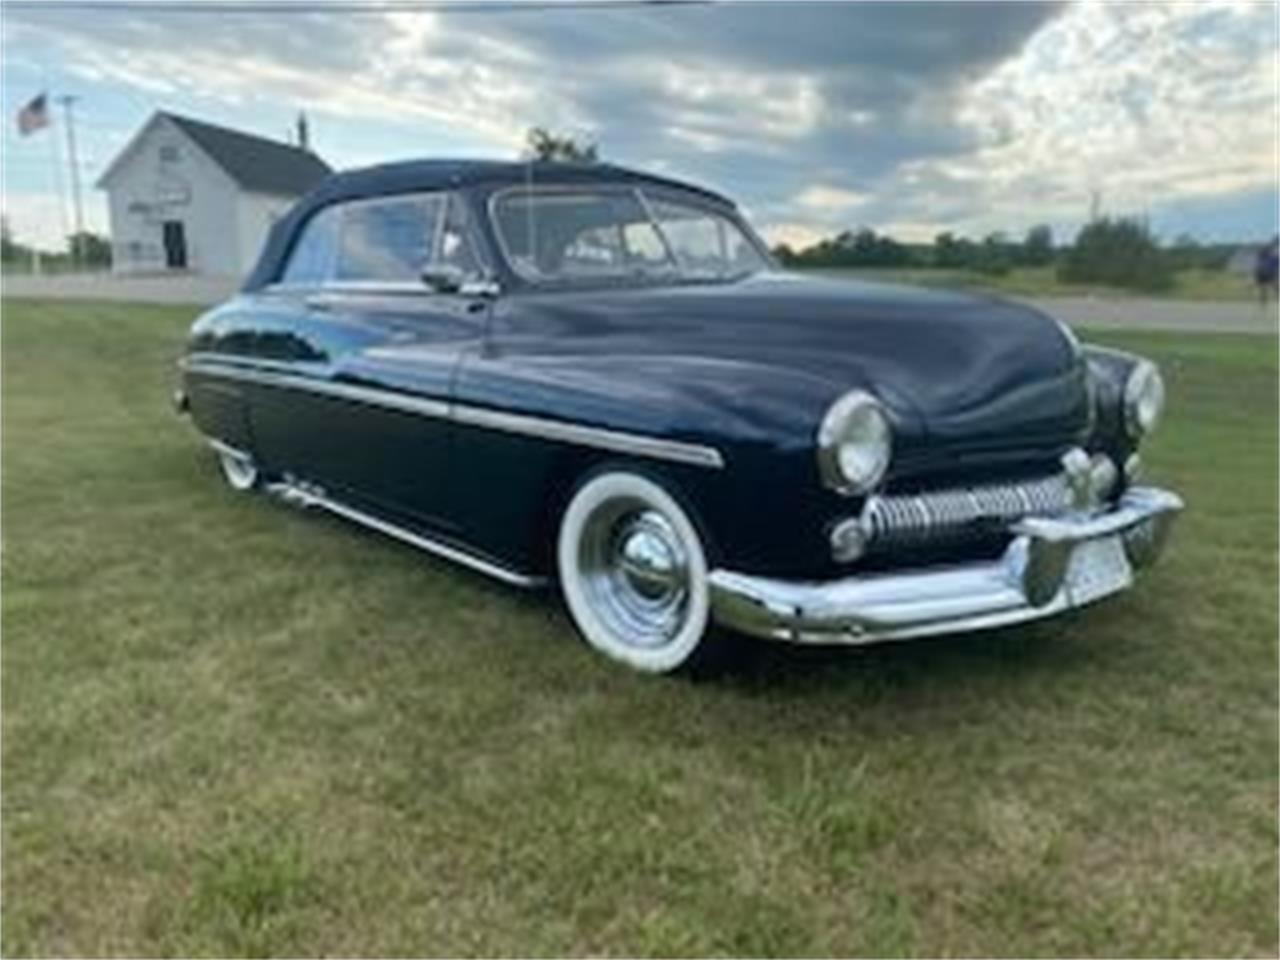 For Sale: 1949 Mercury Custom in Cadillac, Michigan for sale in Cadillac, MI